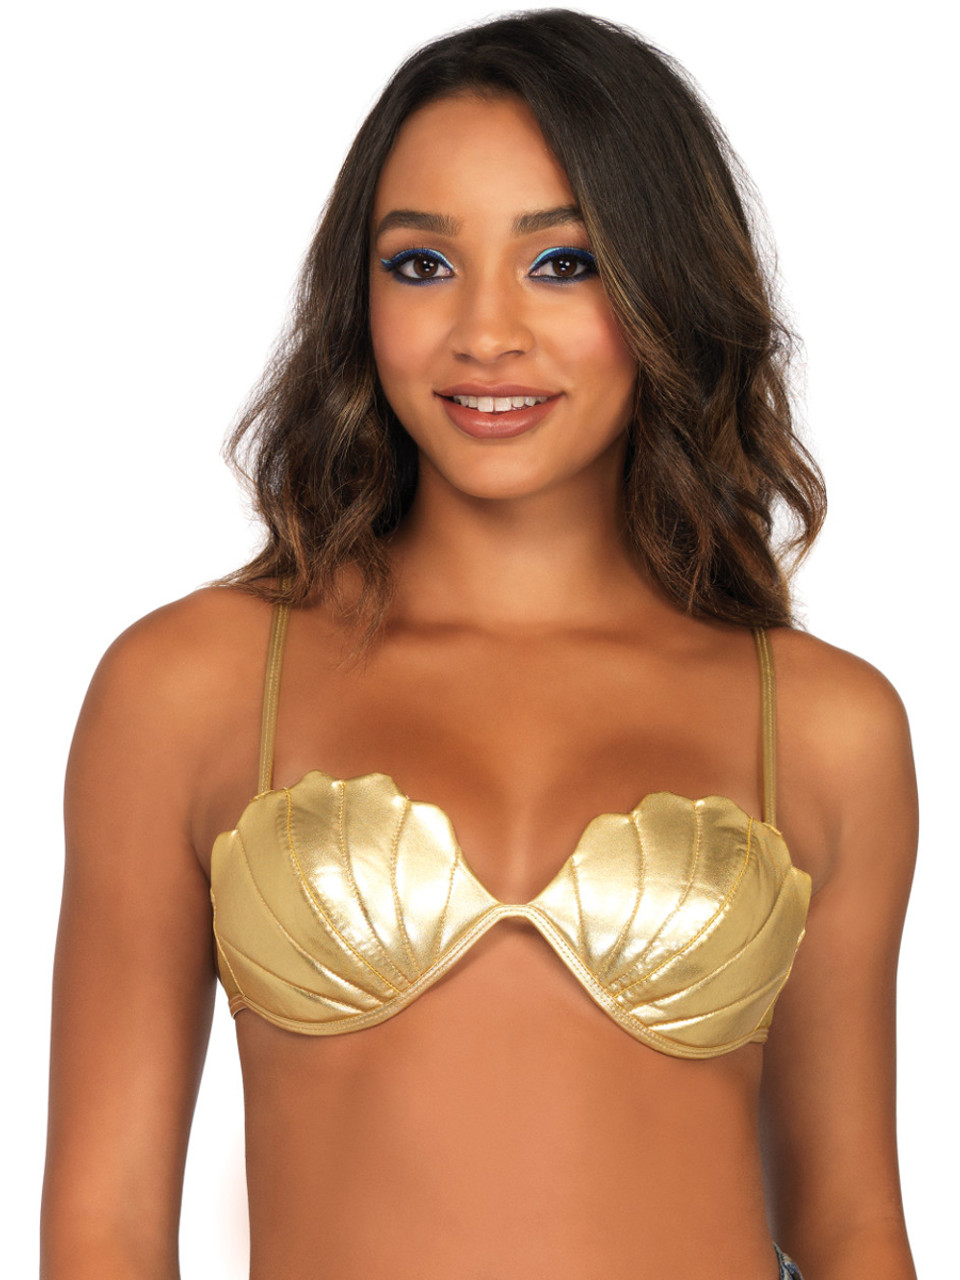 Mermaid Women's Gold Shell Bra Top